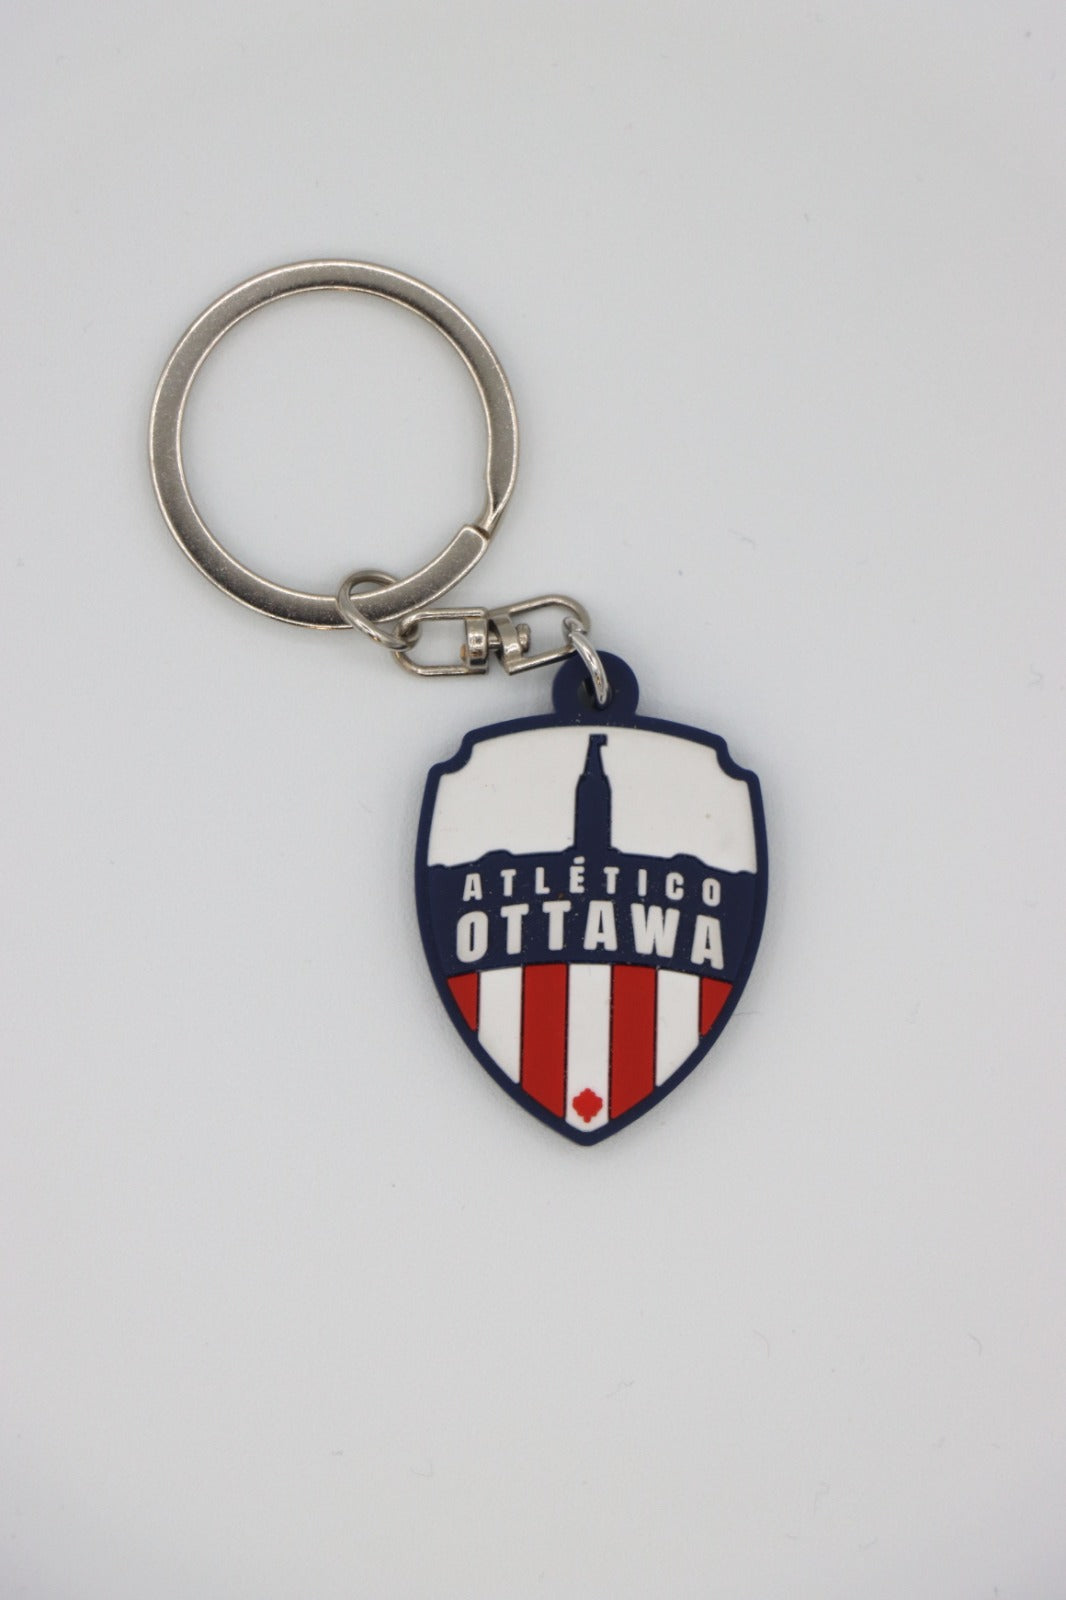 Atletico Ottawa Logo Key Chain